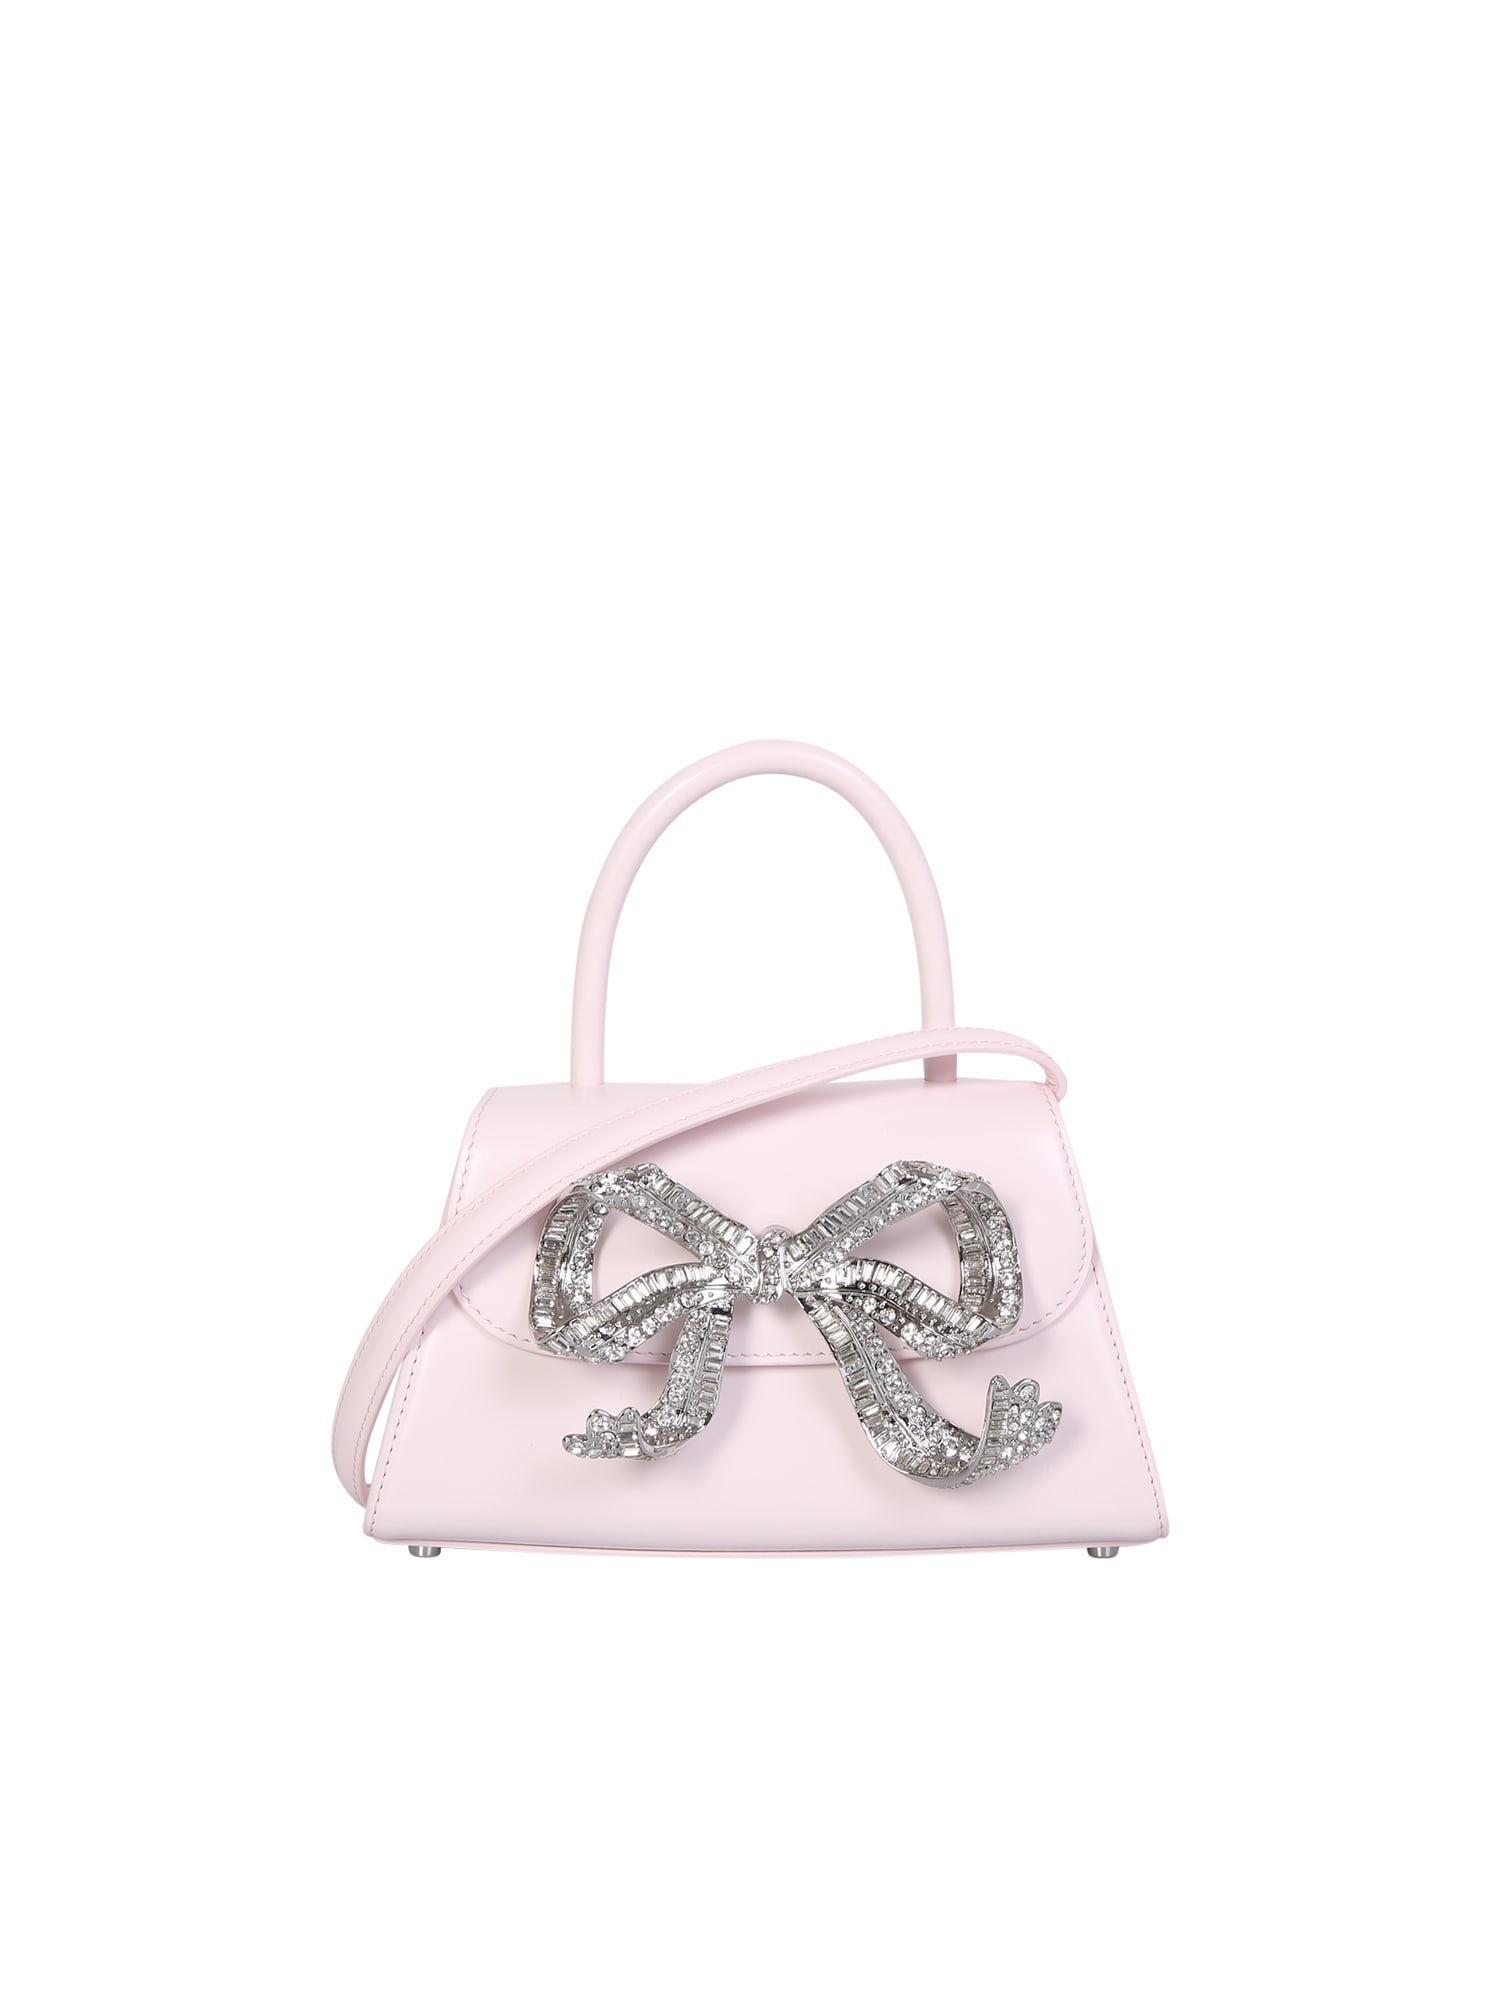 the Bow Mini Handbag